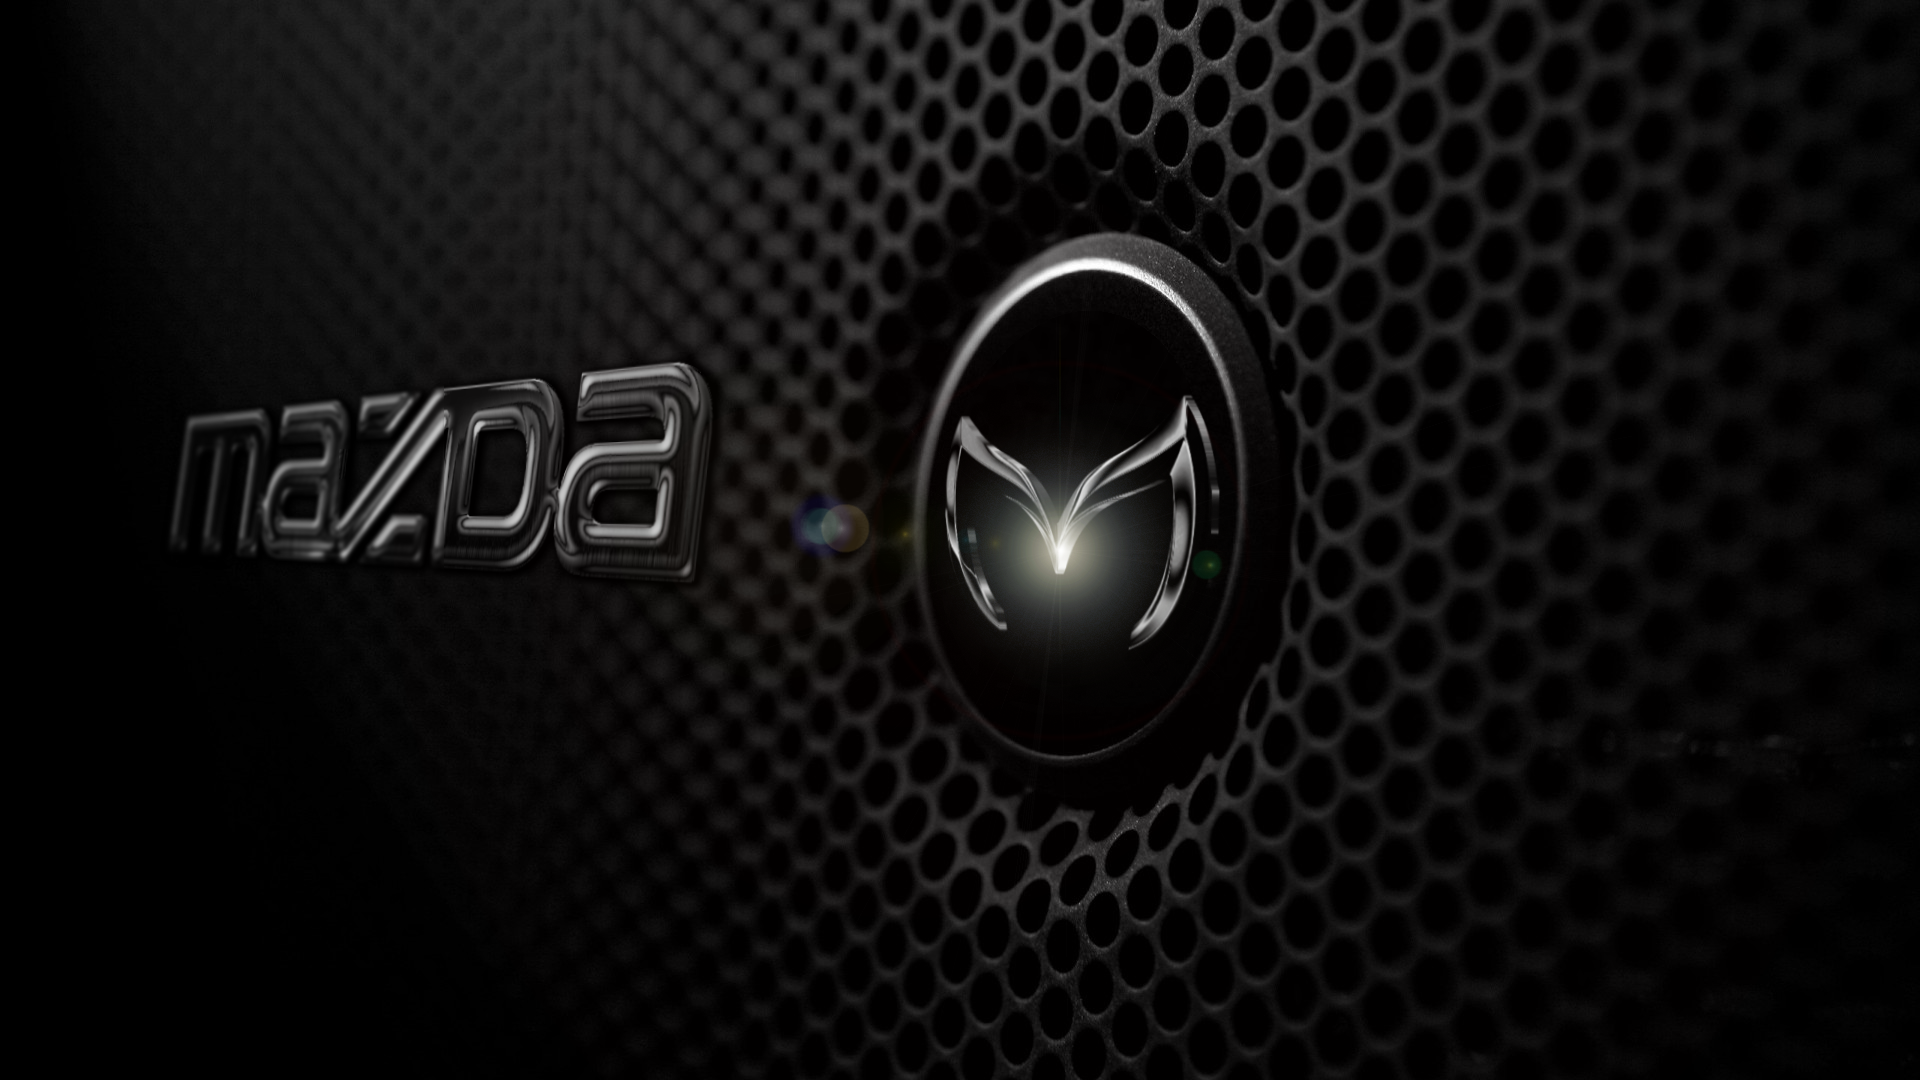 Mazda Logo Wallpaper Hd - image